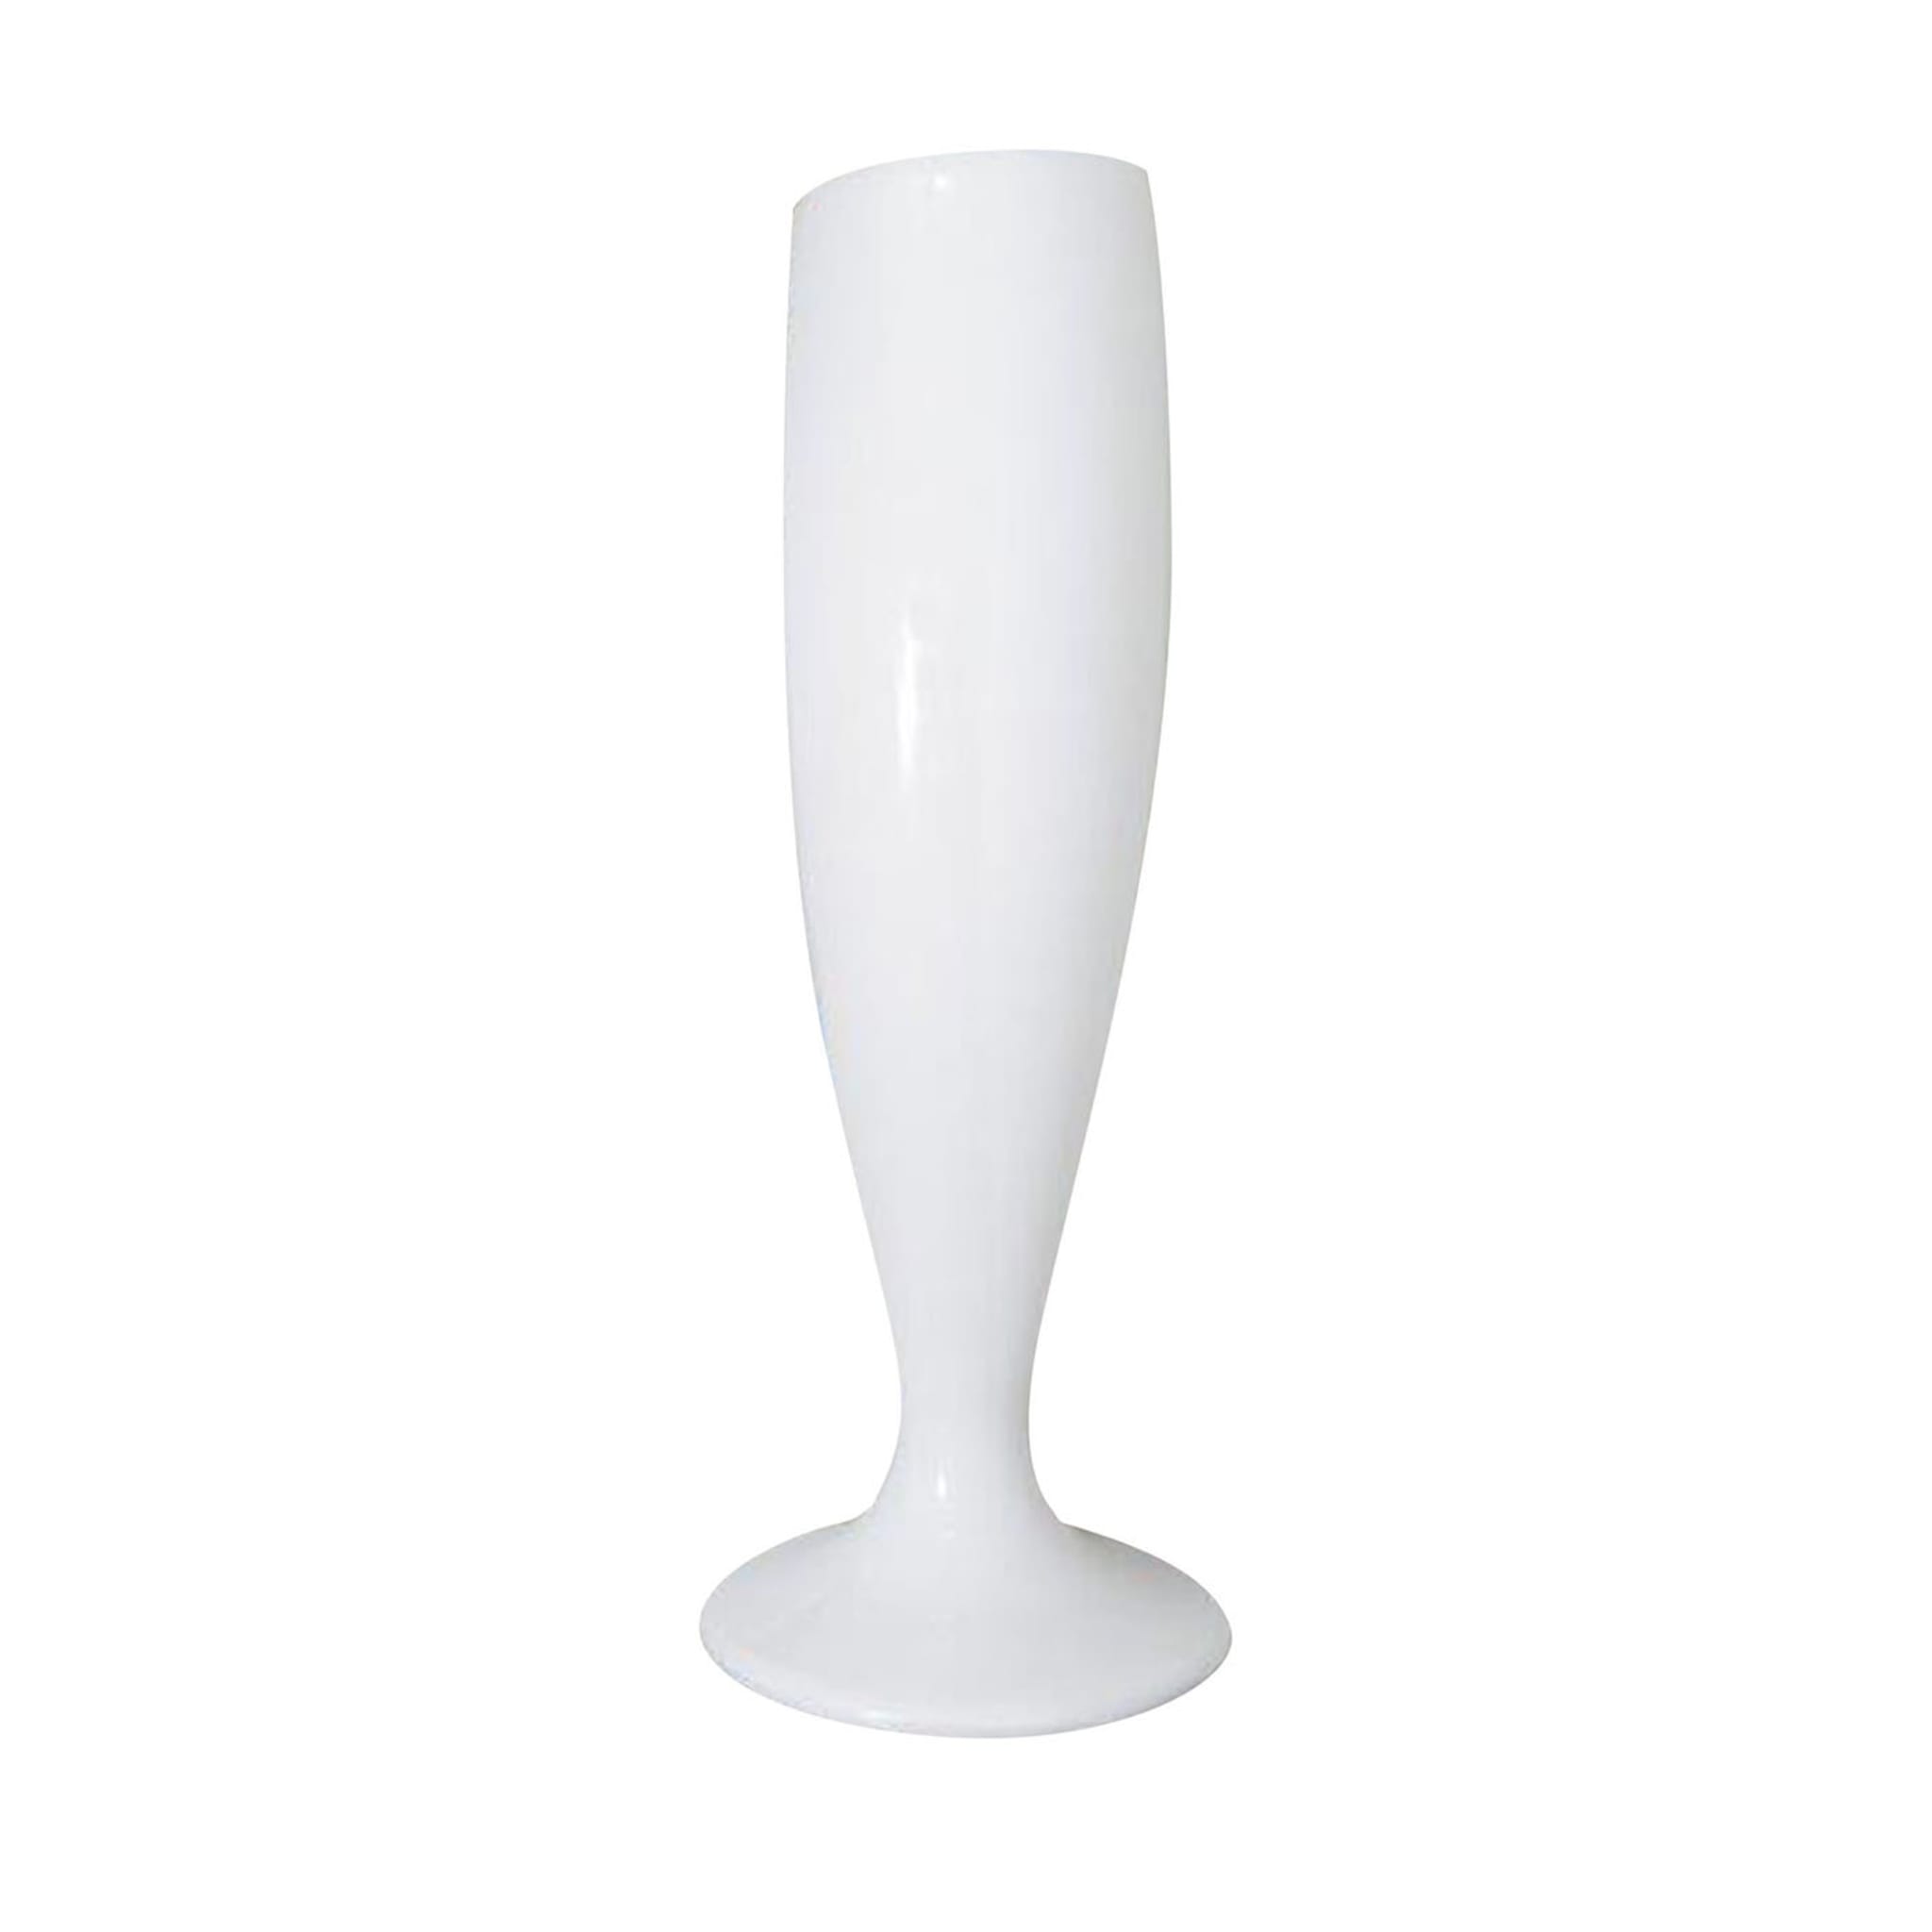 FoRMA Iperbole Flute-Like White Vase by Simone Micheli - Main view